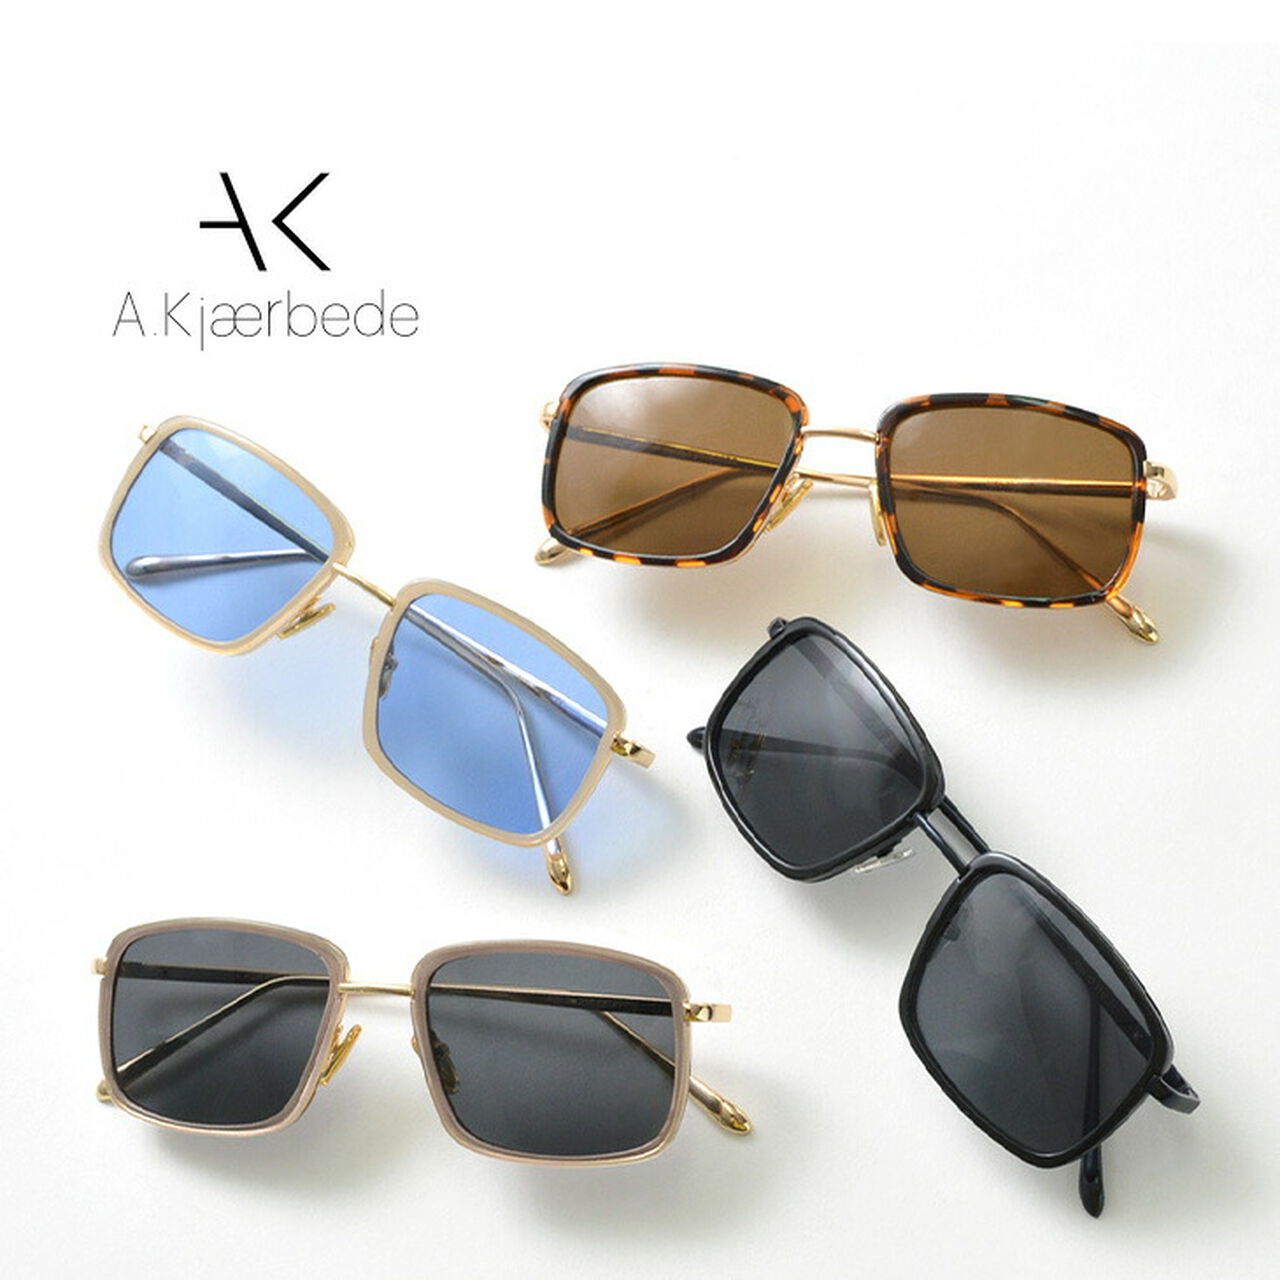 ALDO Asymmetrical Square Sunglasses,, large image number 1